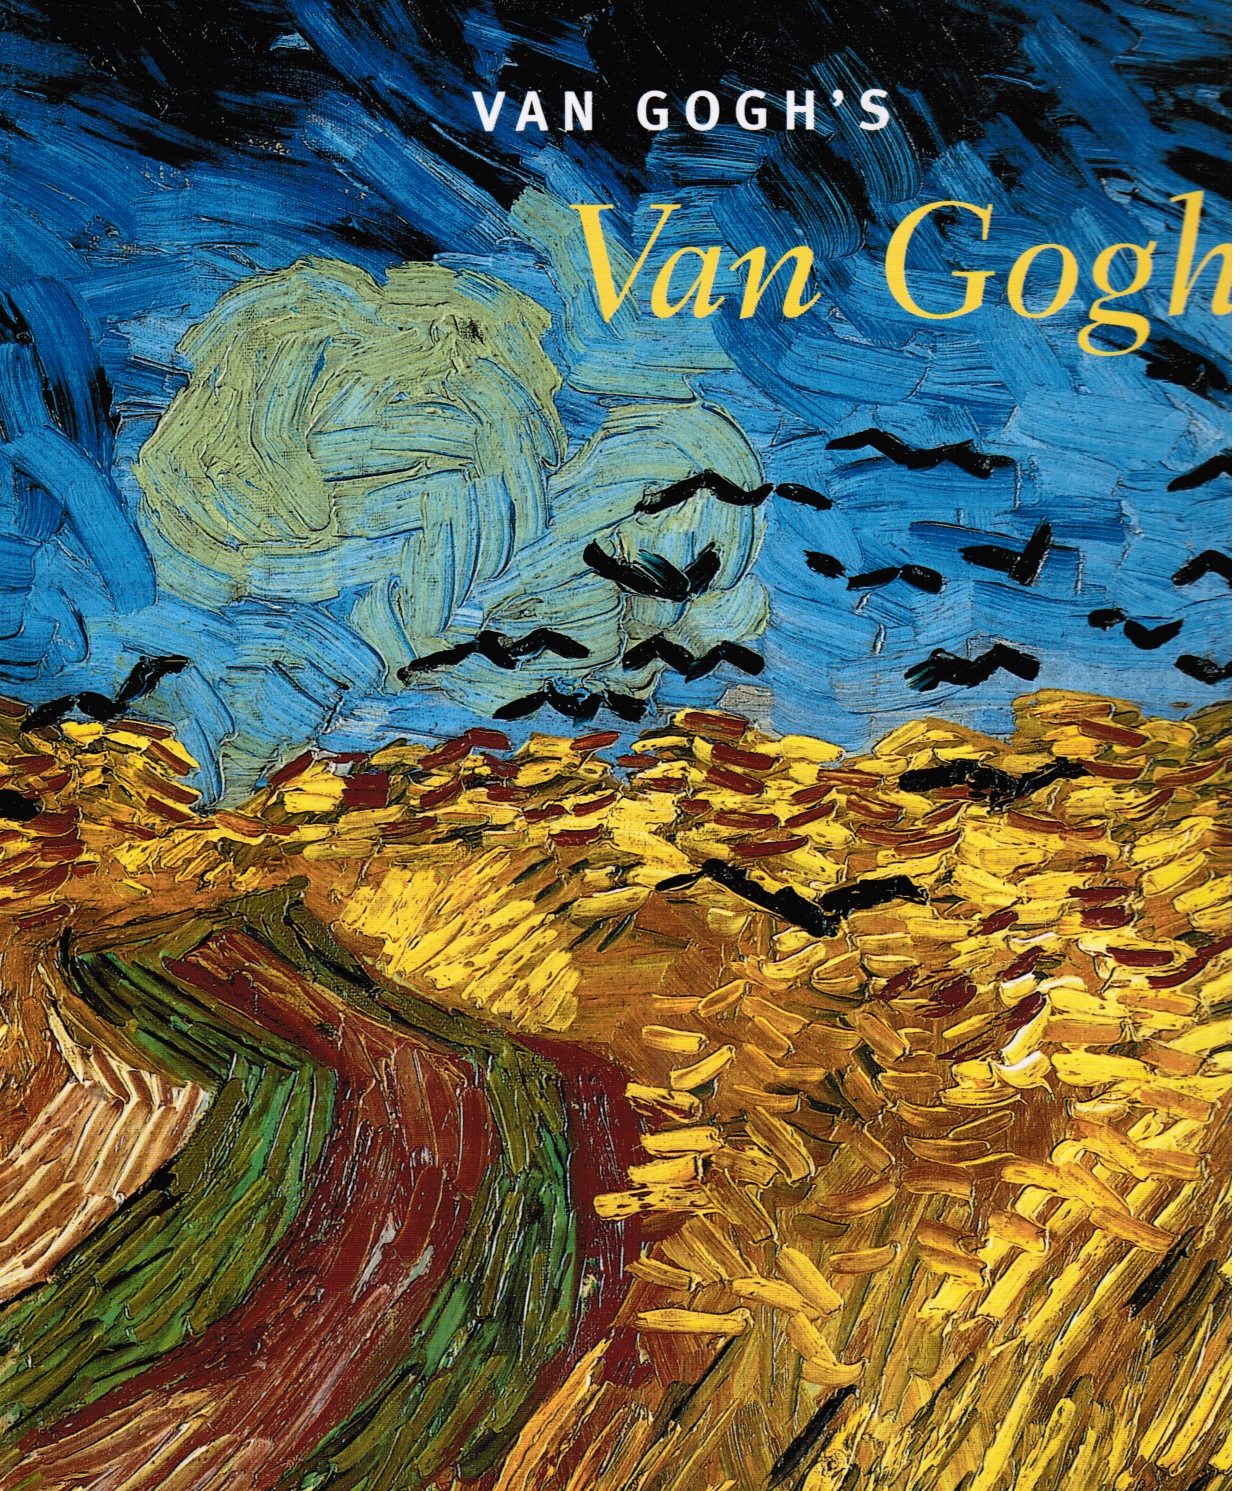 FRANCES P. SMYTH, EDITOR-IN-CHIEF; SUSAN HIGMAN, EDITOR; CHRIS VOGEL, DESIGNER - Van Gogh's Van Goghs: Masterpieces from the Van Gogh Museum, Amsterdam